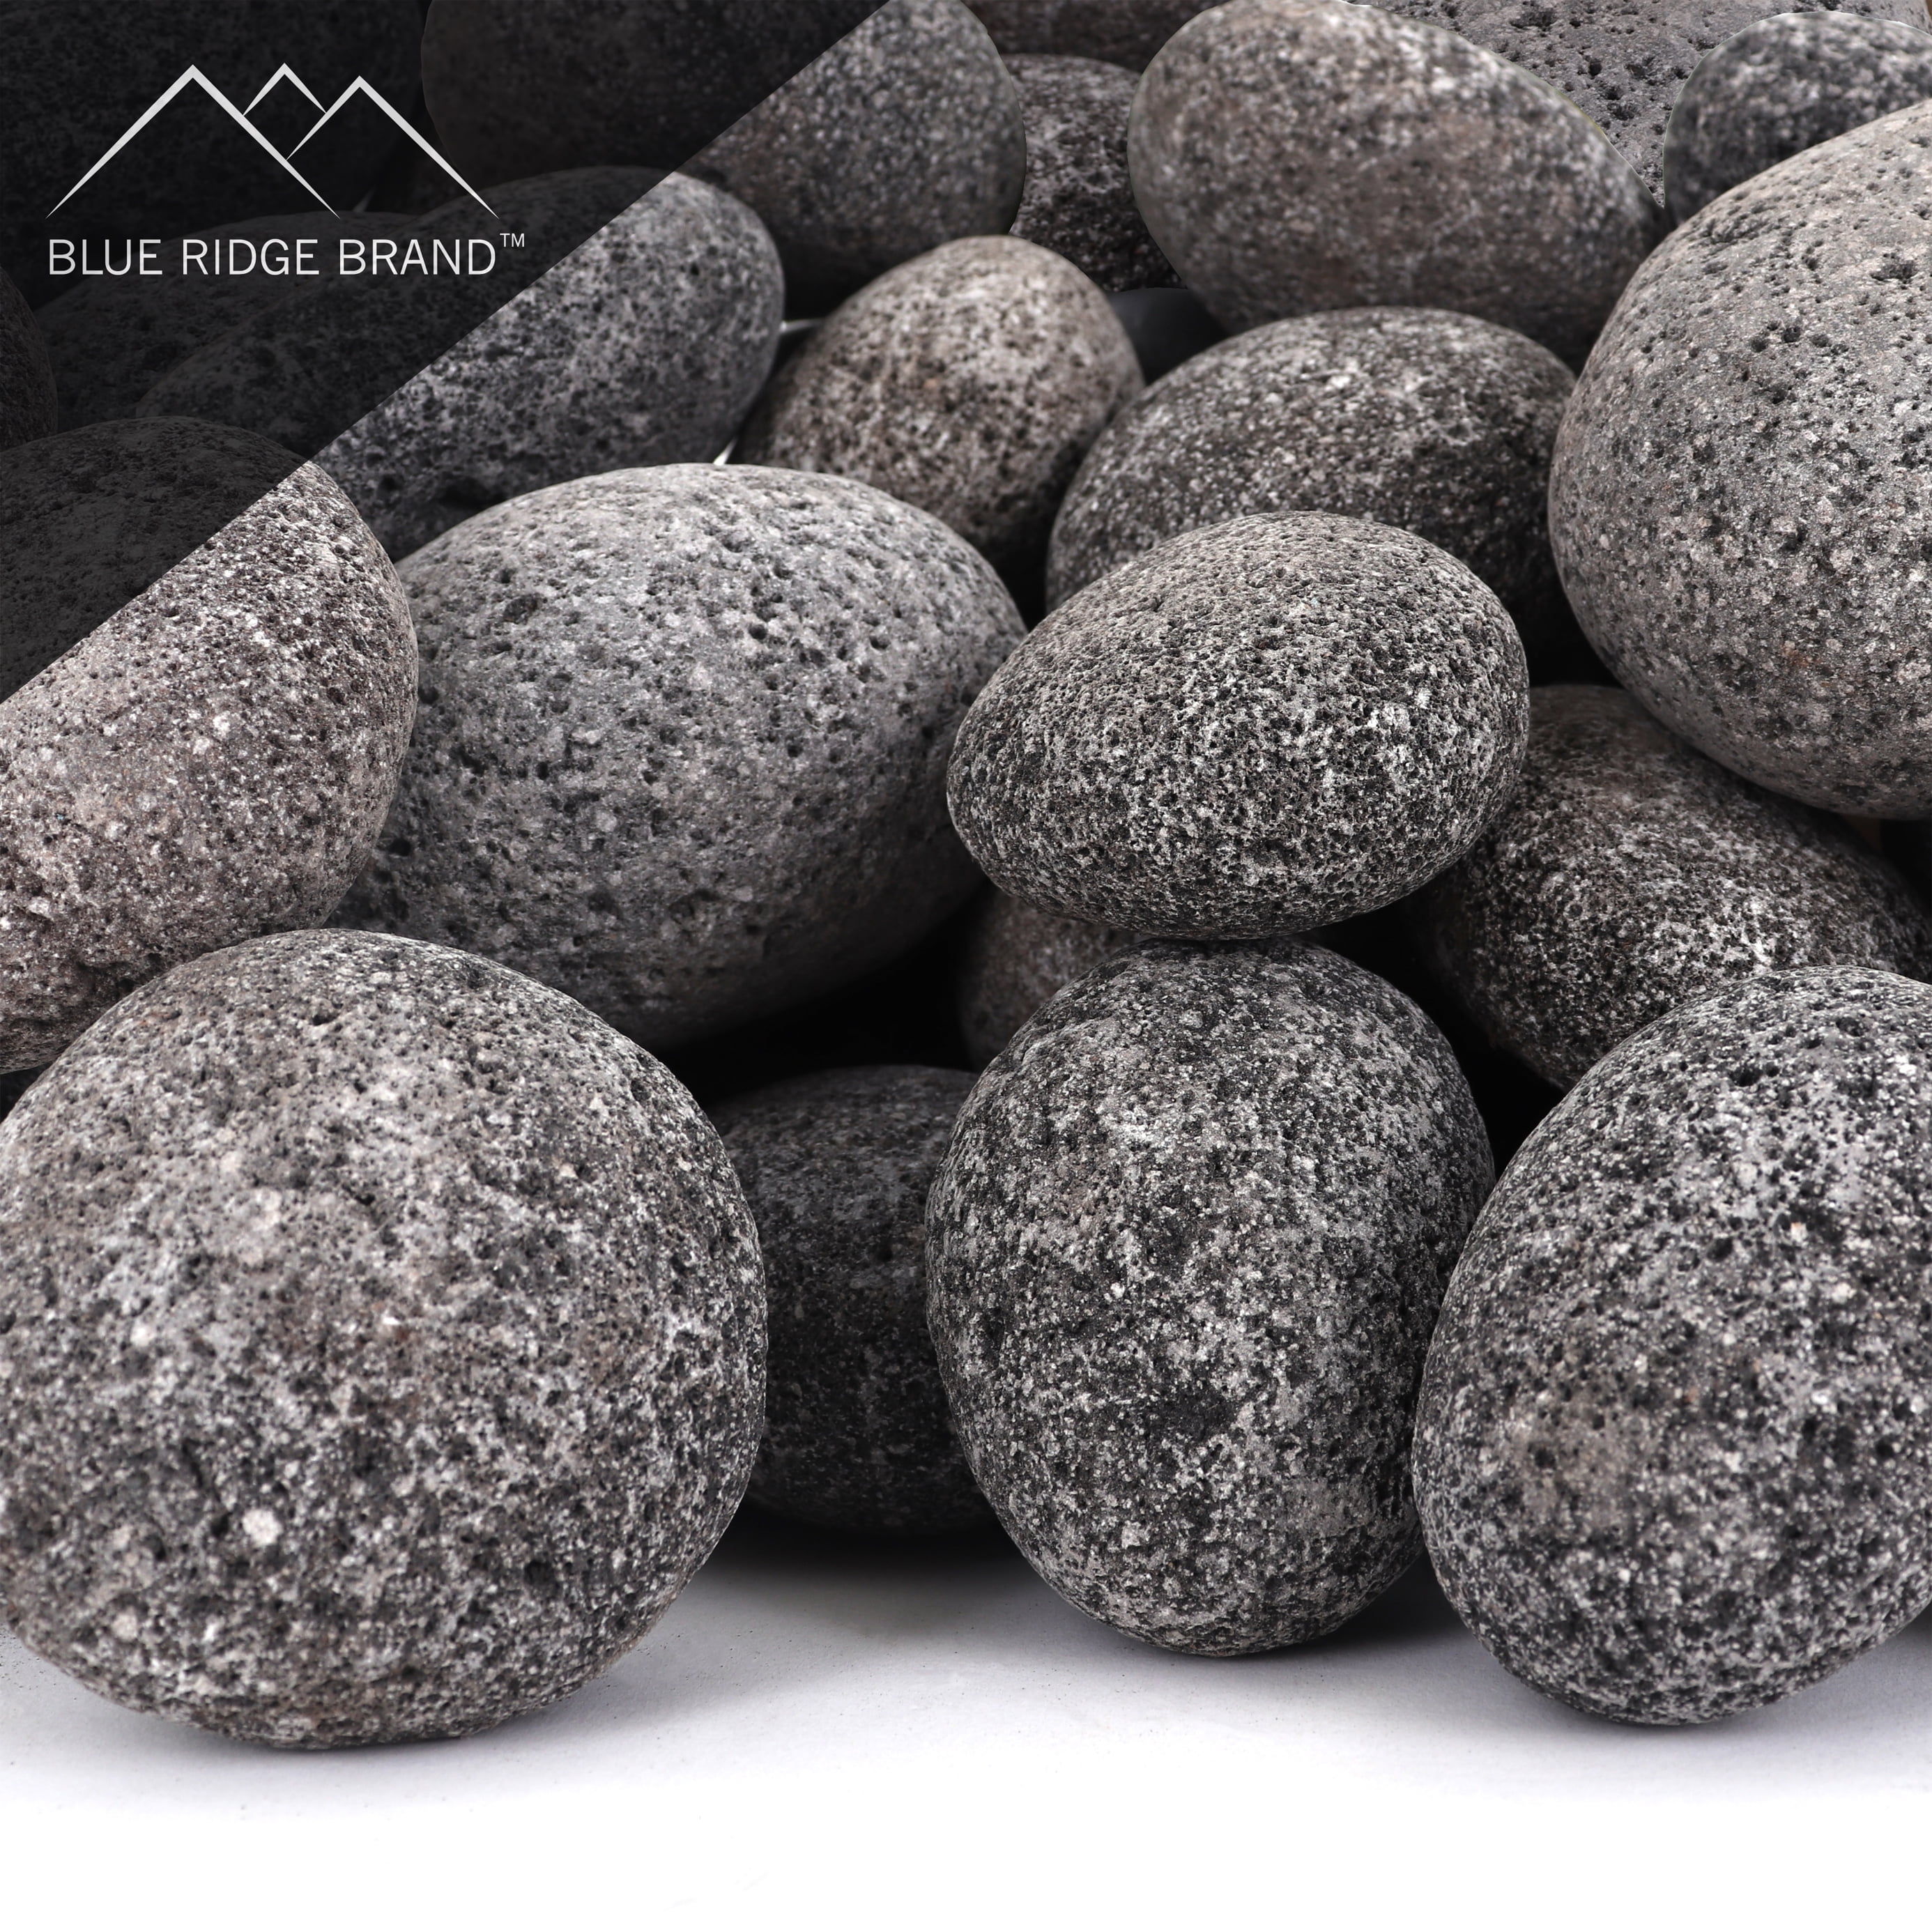 10-Pound Tumbled Lava Stones Blue Ridge Brand Lava Rock 2 Black/Gray Lava Pebbles Volcanic Rock Landscaping Rocks 